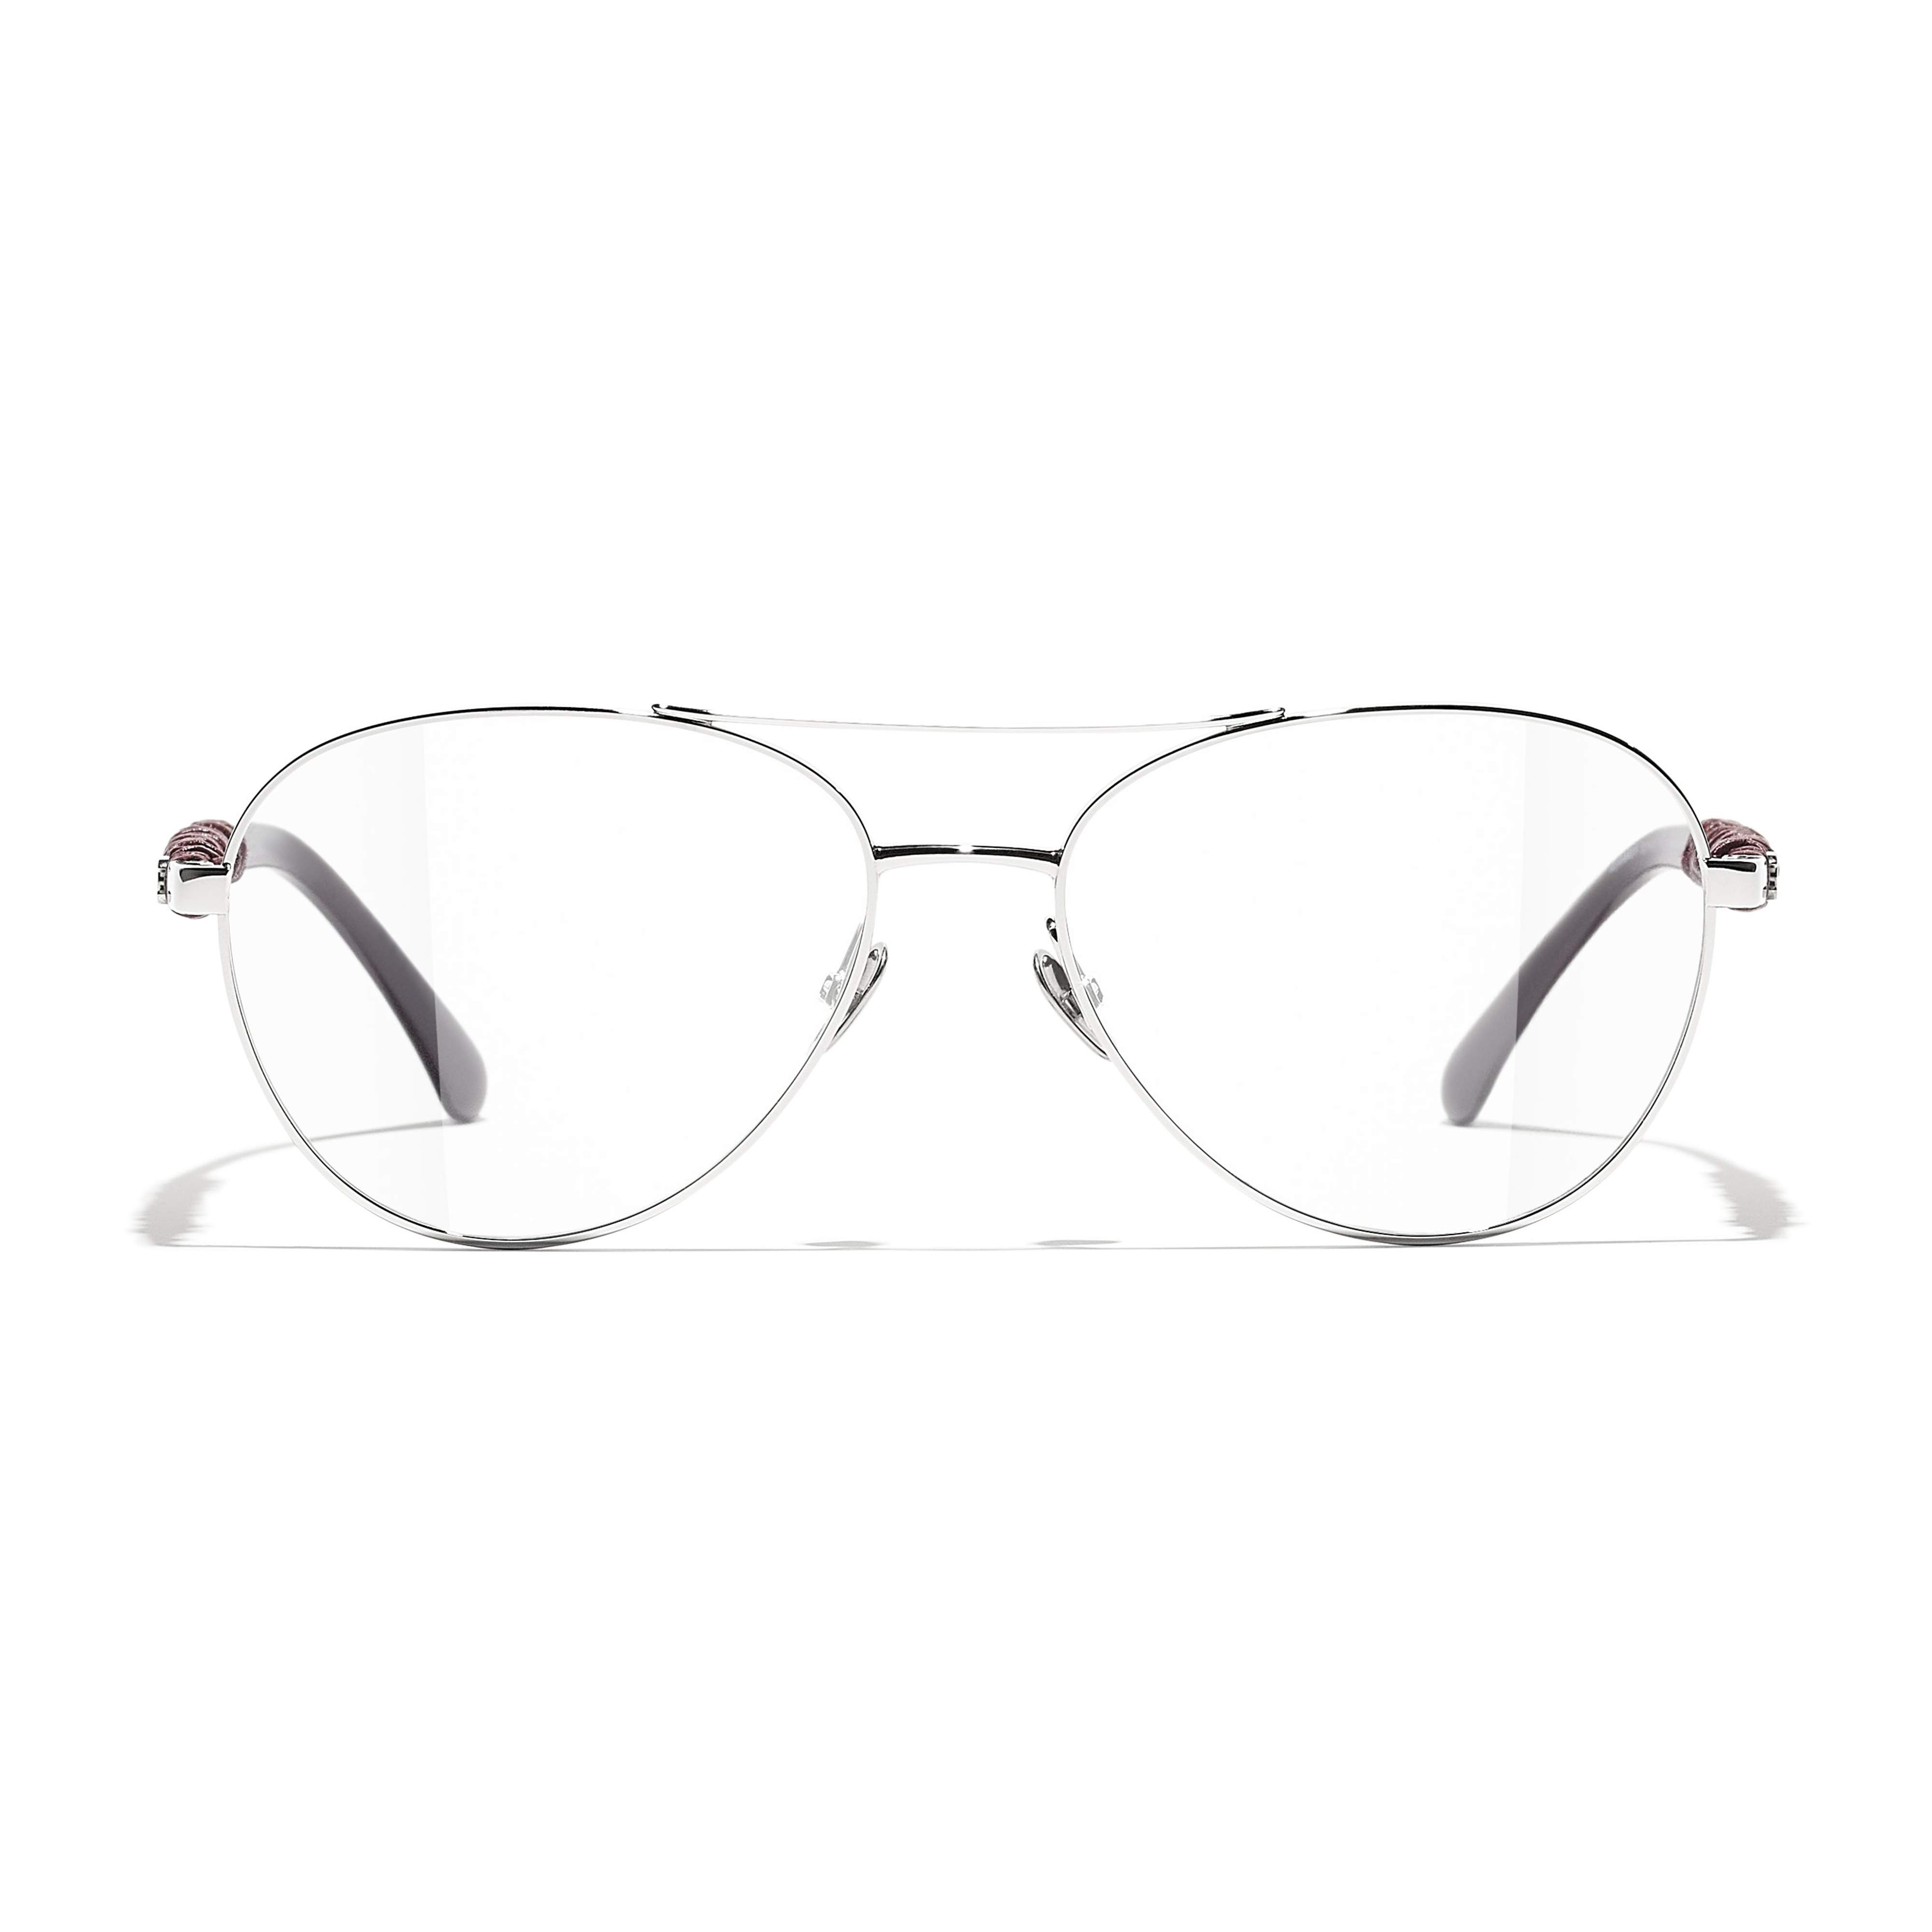 Chanel Glasses - David H Myers